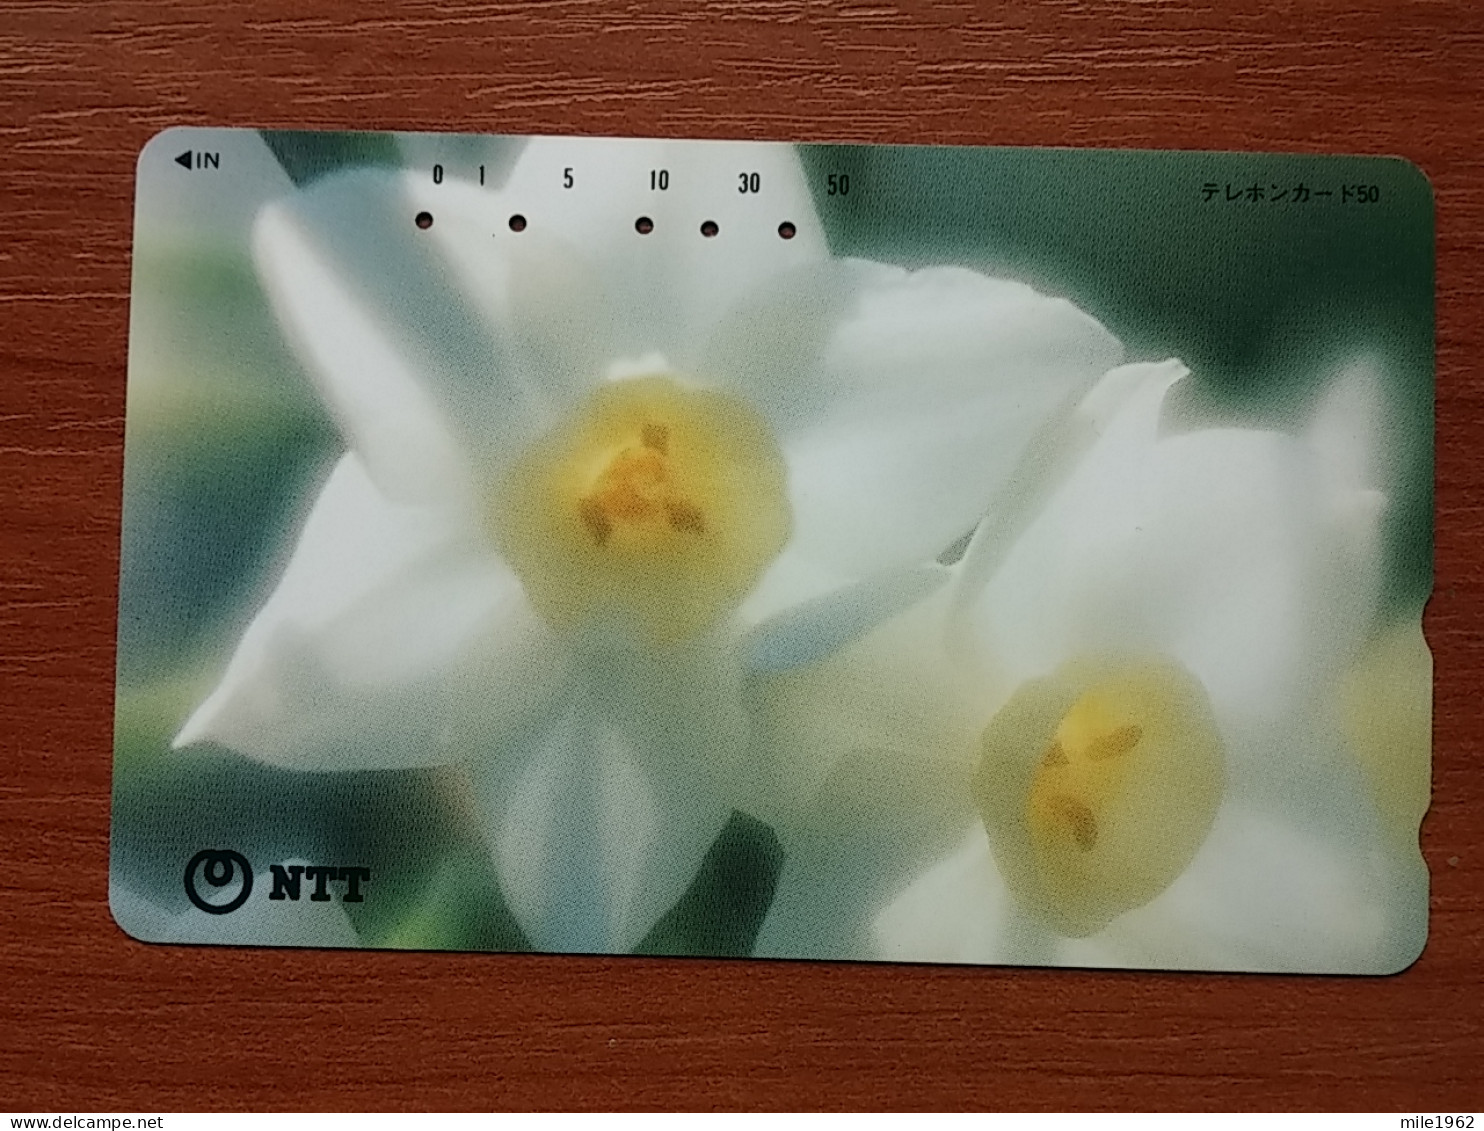 T-385 - JAPAN, Japon, Nipon, TELECARD, PHONECARD, Flower, Fleur, NTT 111-090 - Blumen